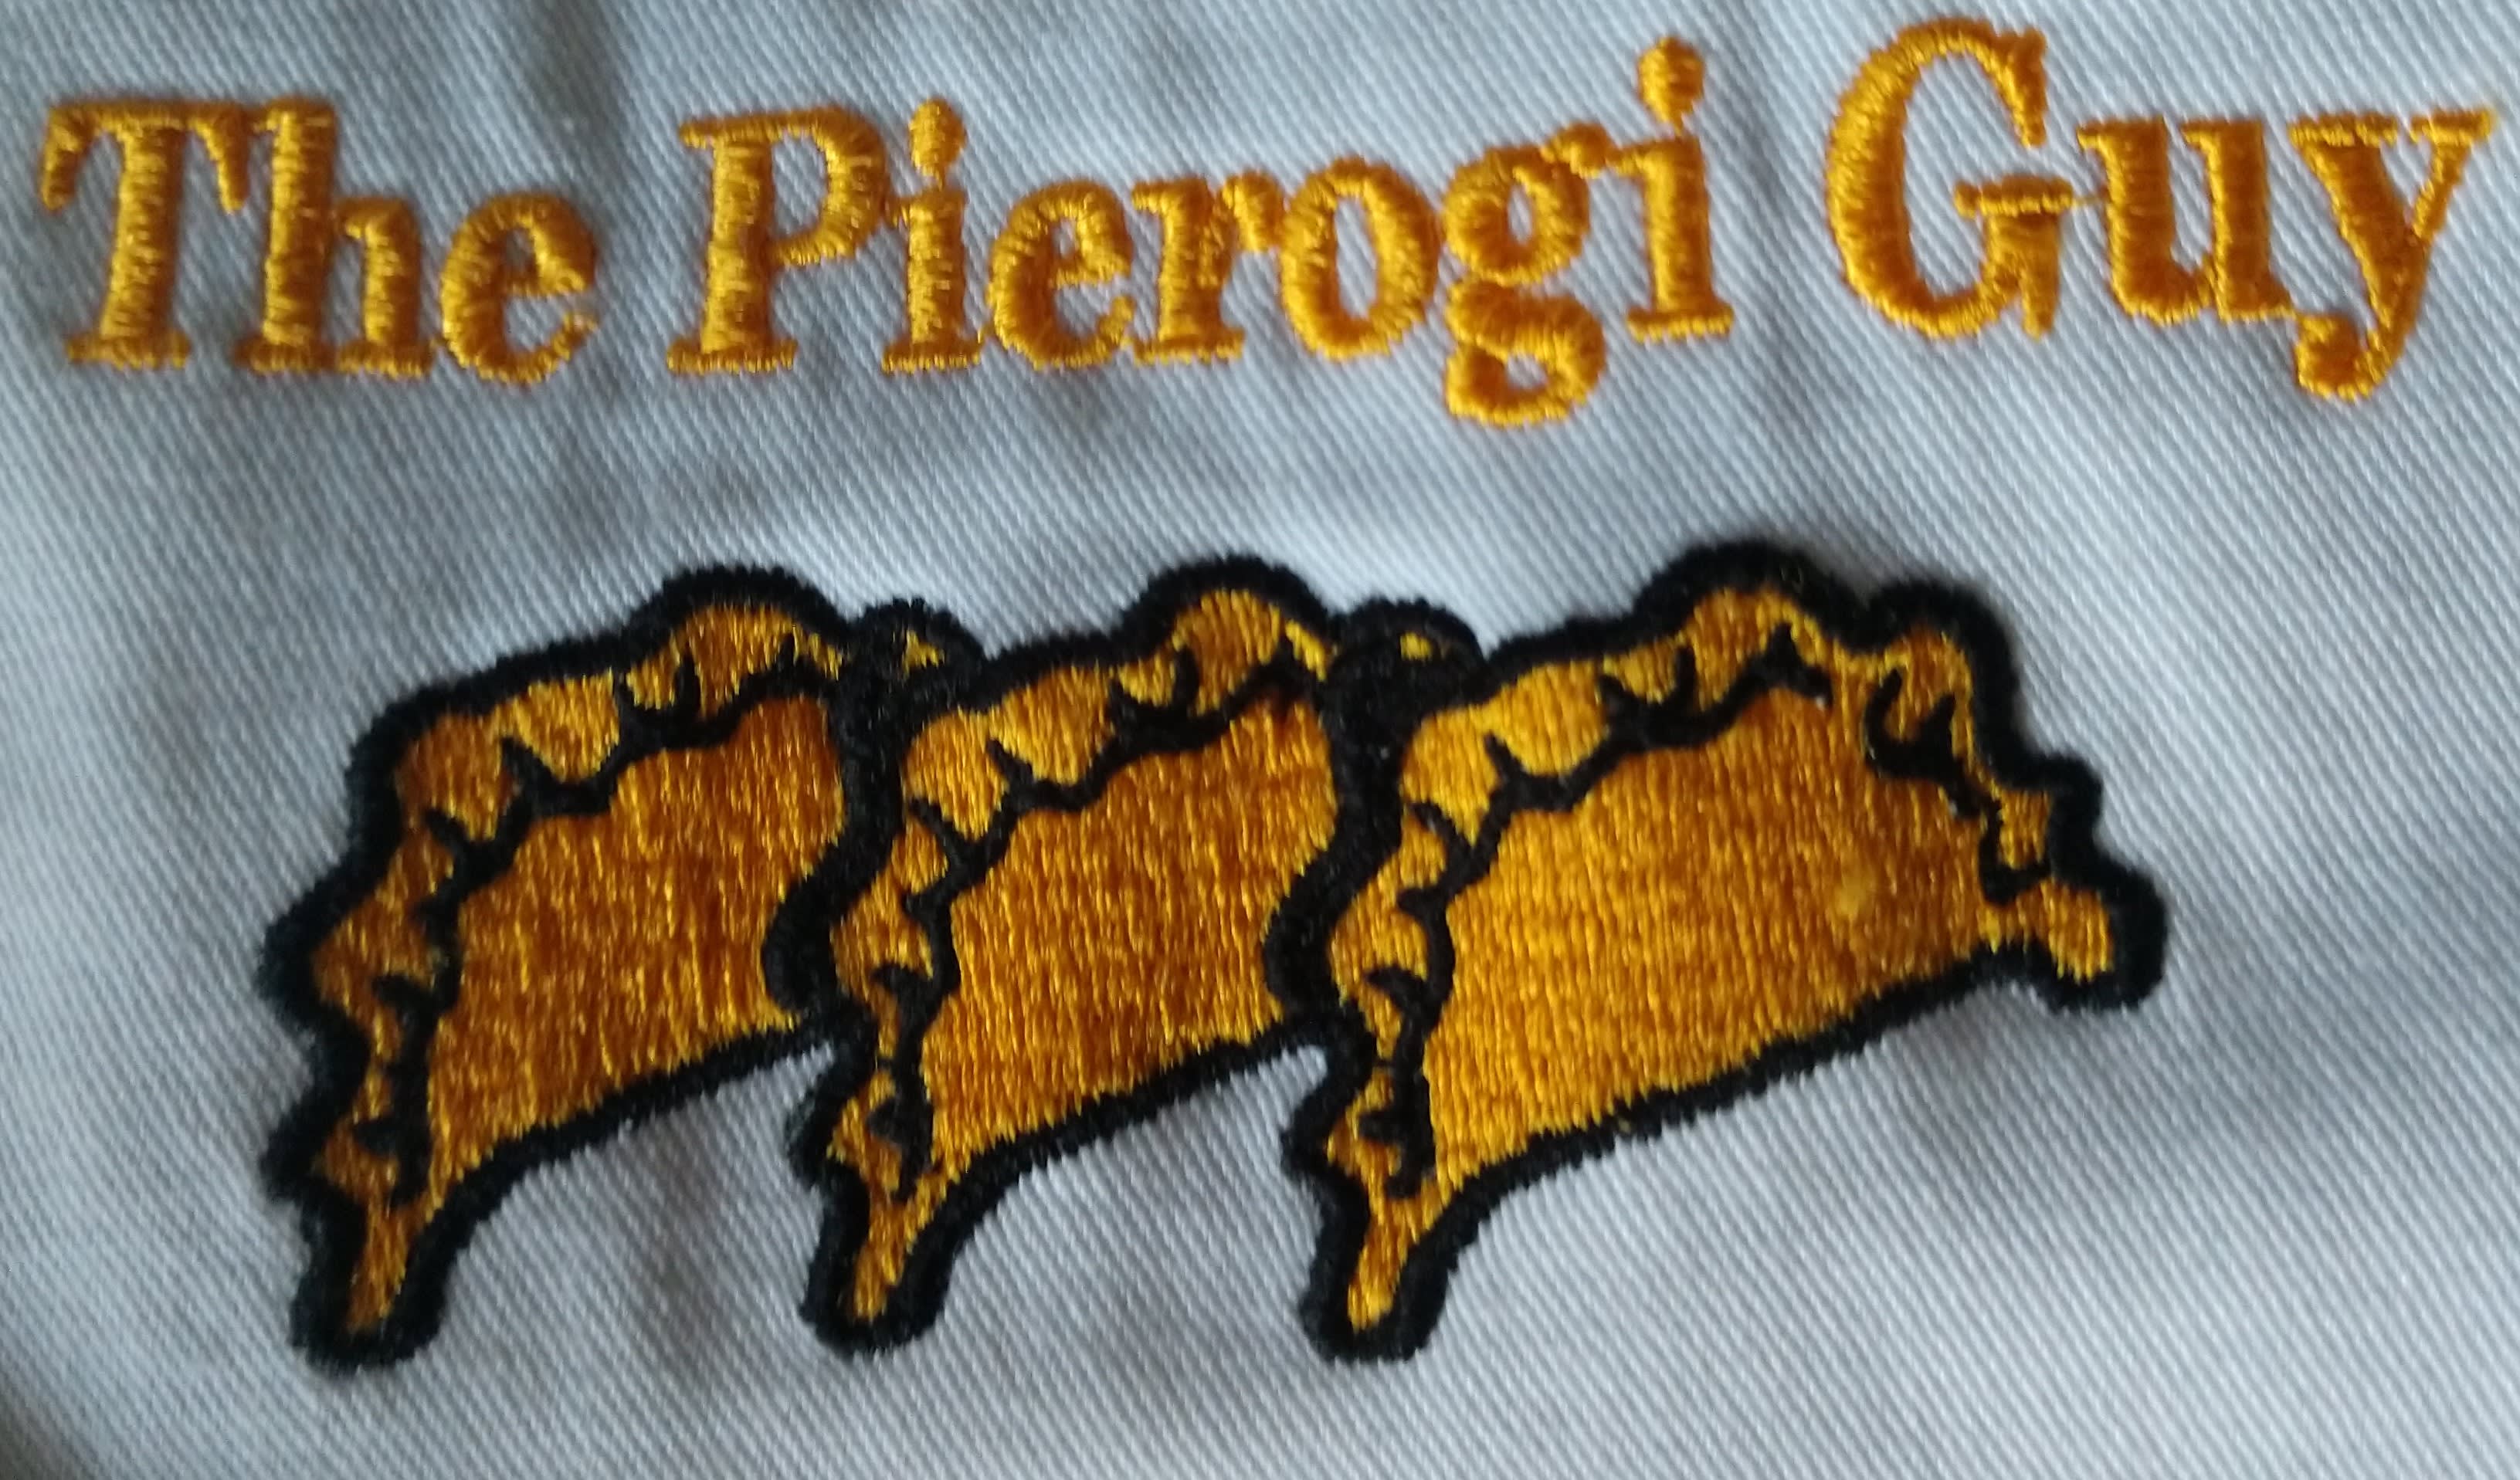 The Pierogi Guy